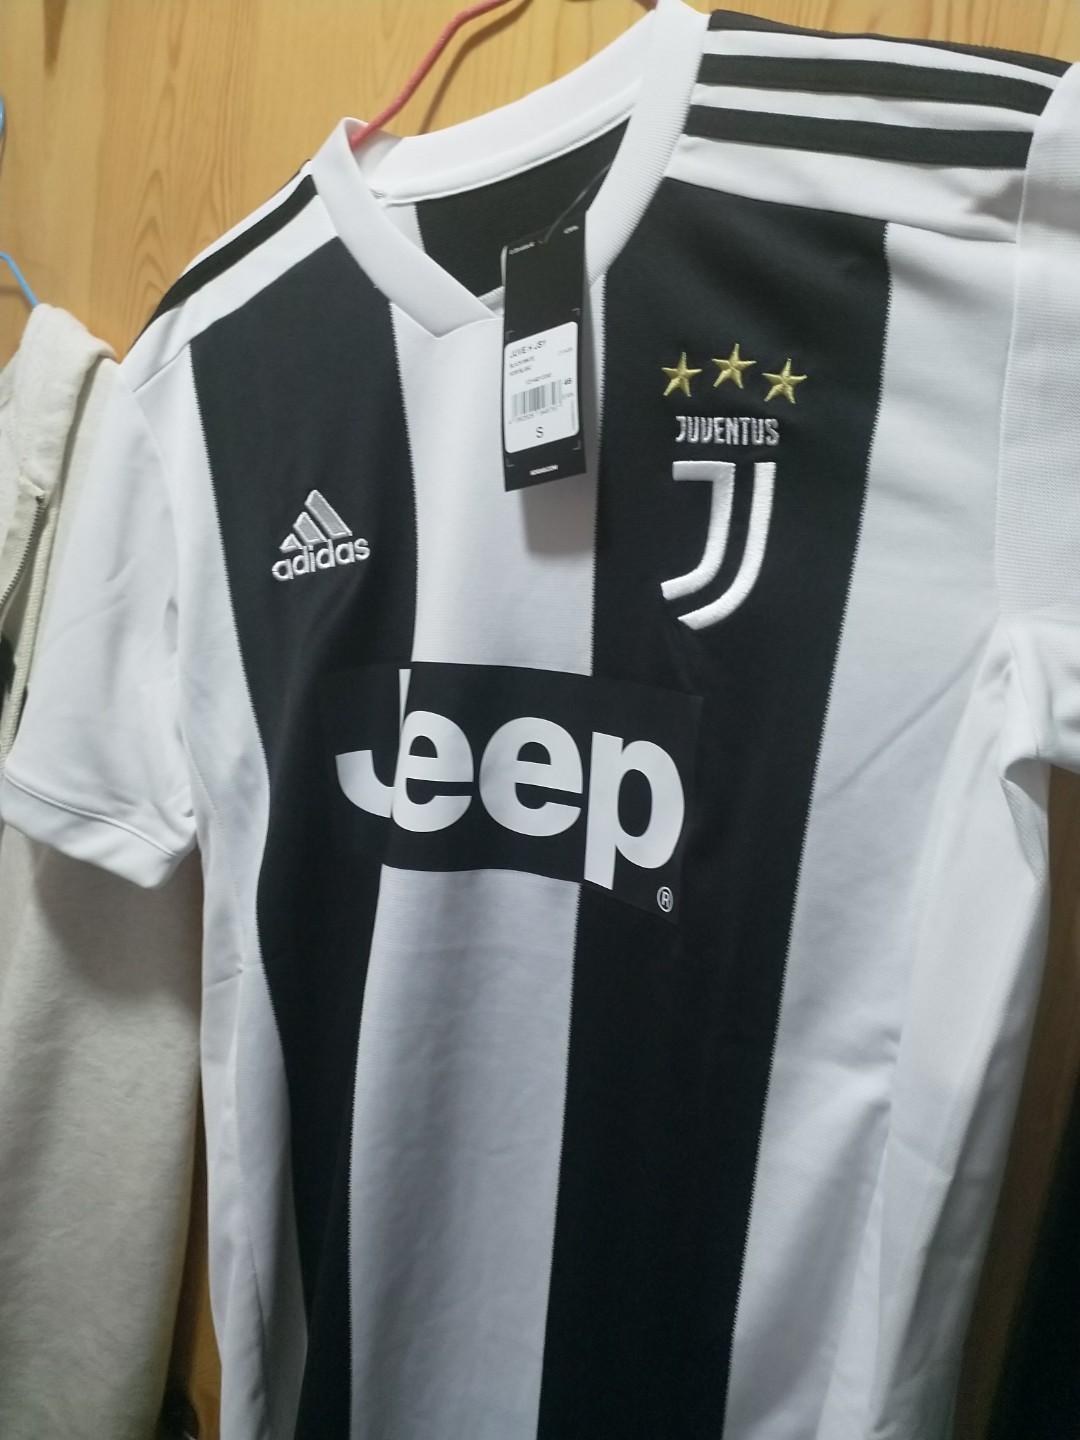 Juventus祖雲達斯18 19 Home Kit 主場球衣ronaldo C朗拿度印字s Size 細碼 男裝 運動服裝 Carousell